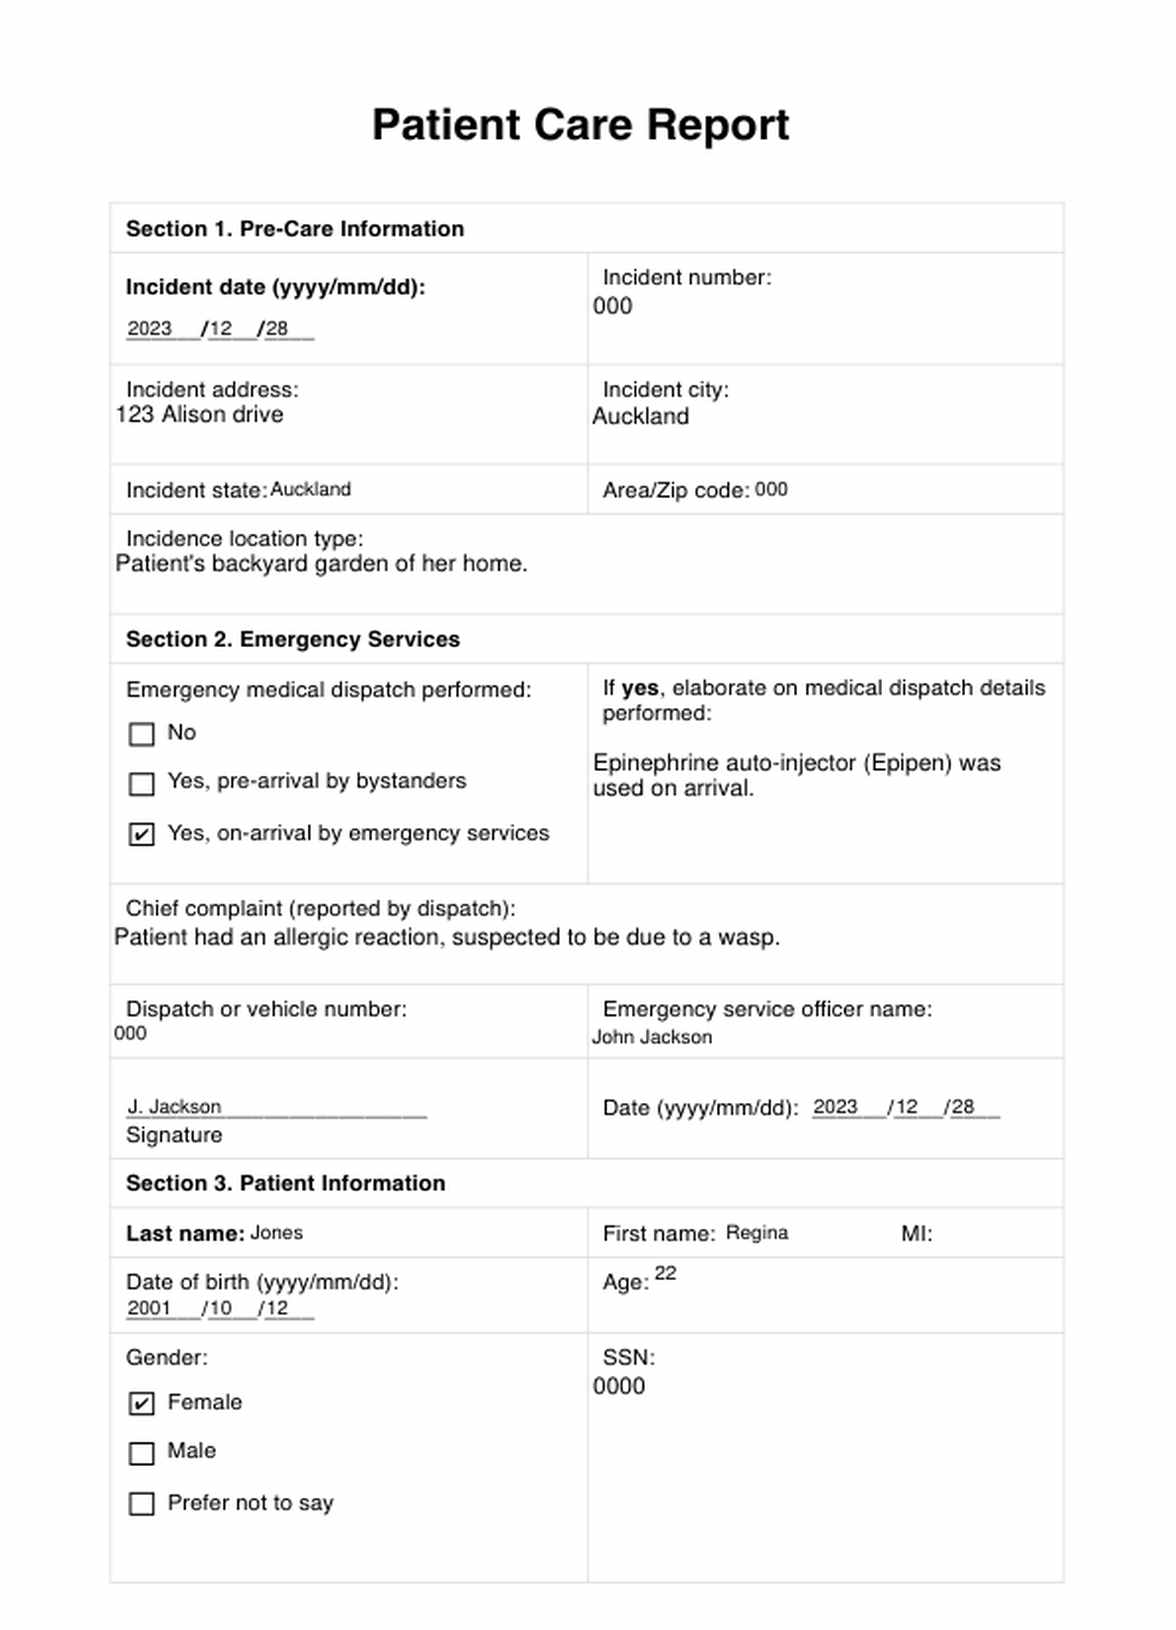 Patient Care Report PDF Example